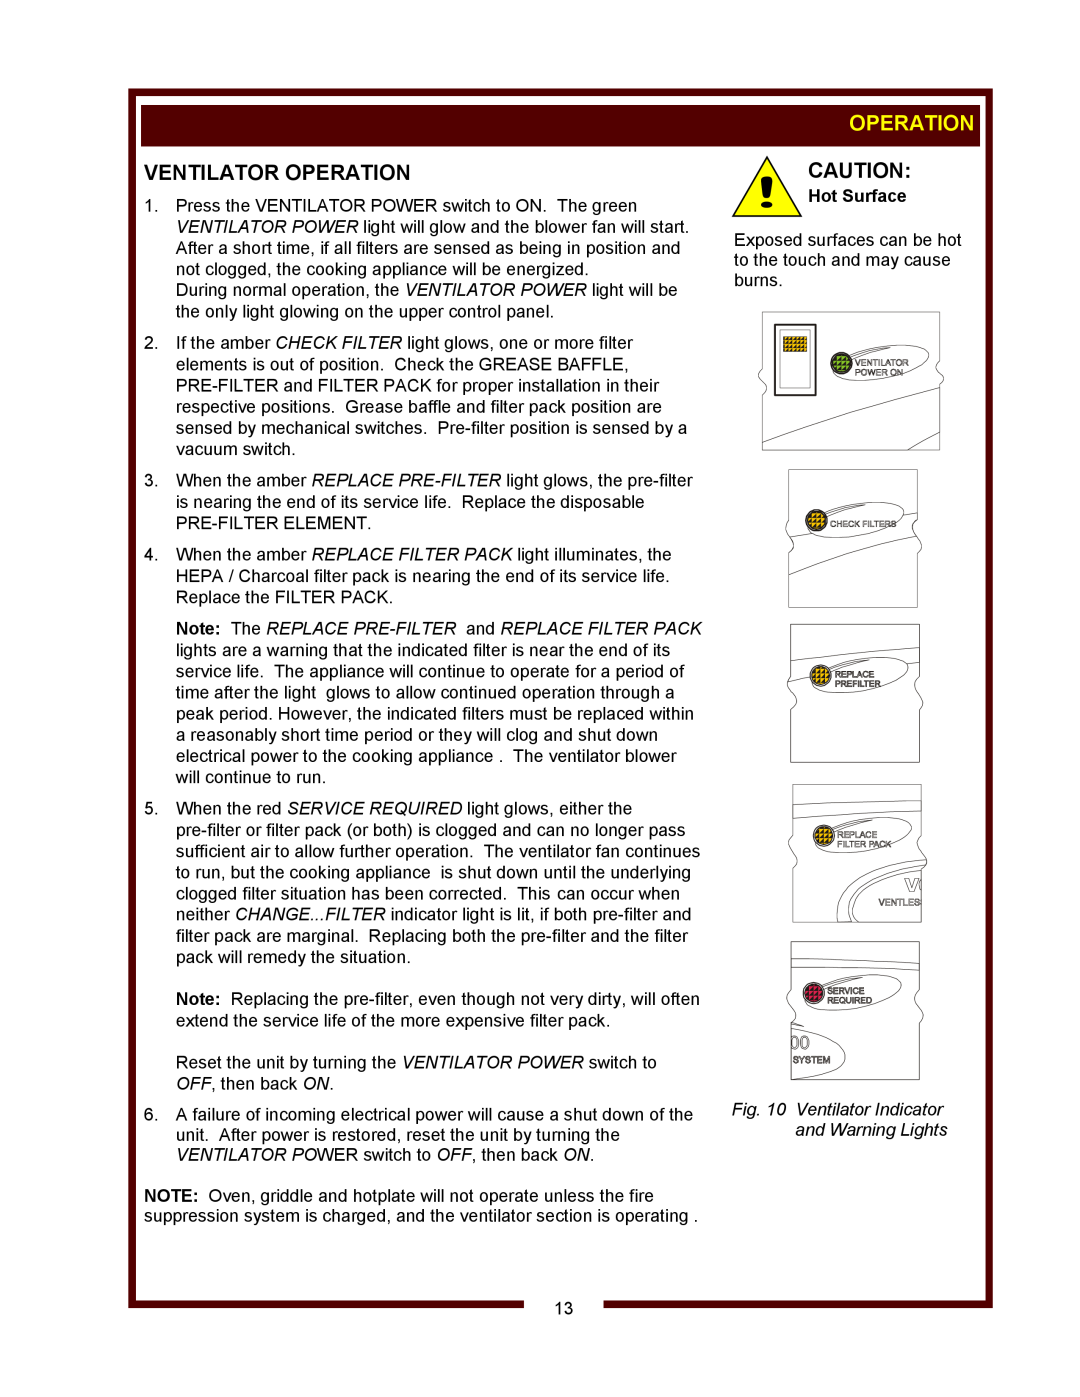 Bloomfield WVOC-2HFG, WVOC-2HSG operation manual Ventilator Operation, Hot Surface, Ventilator Indicator and Warning Lights 